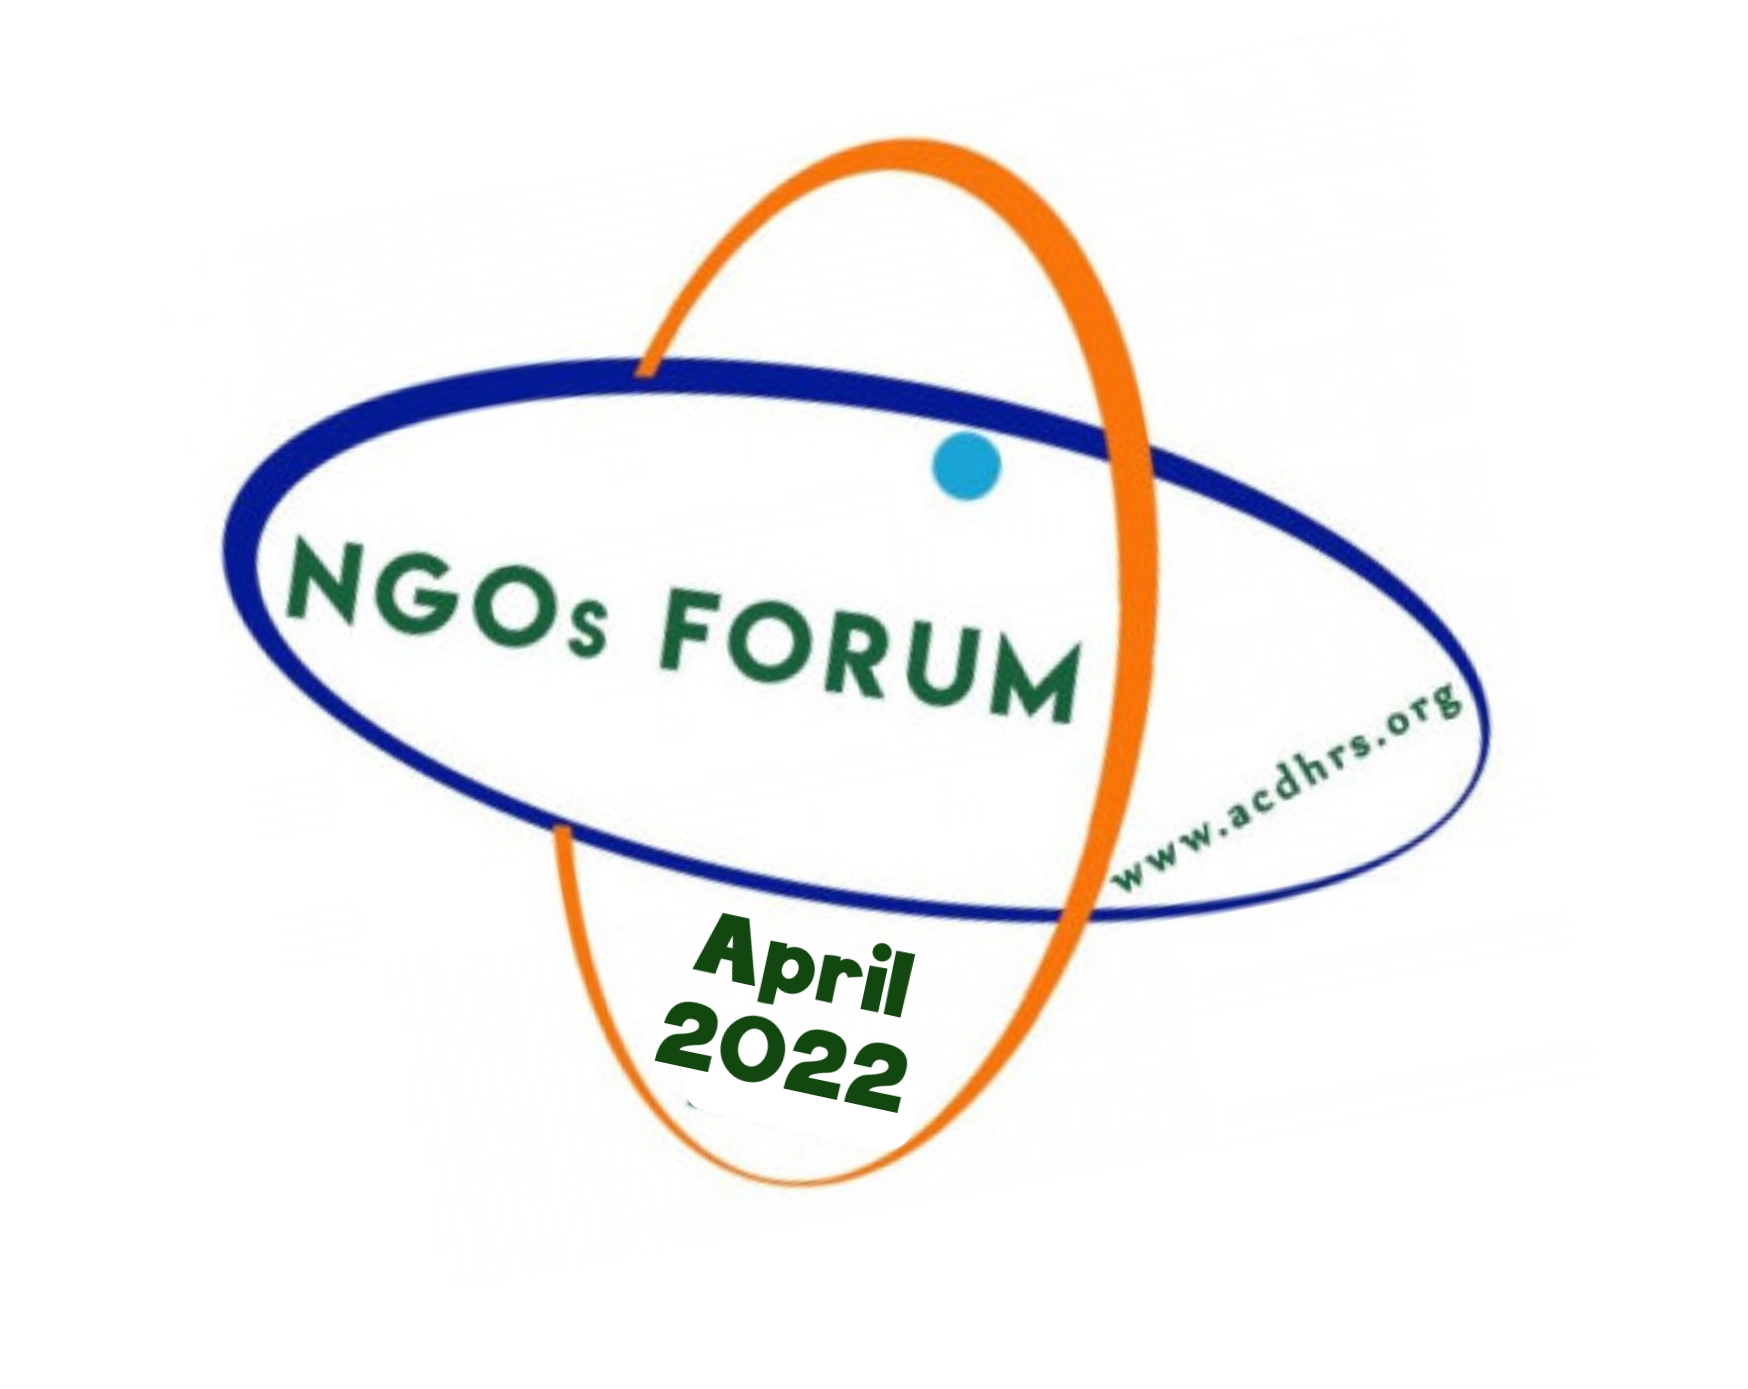 ngo forum logo